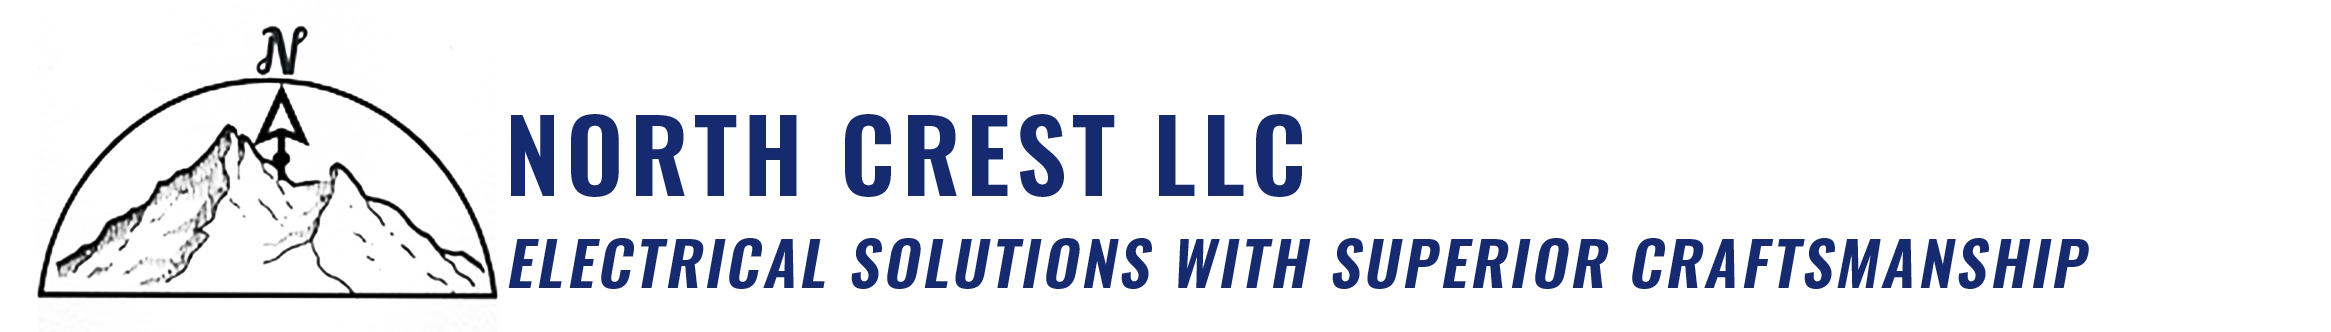 North Crest LLC Logo